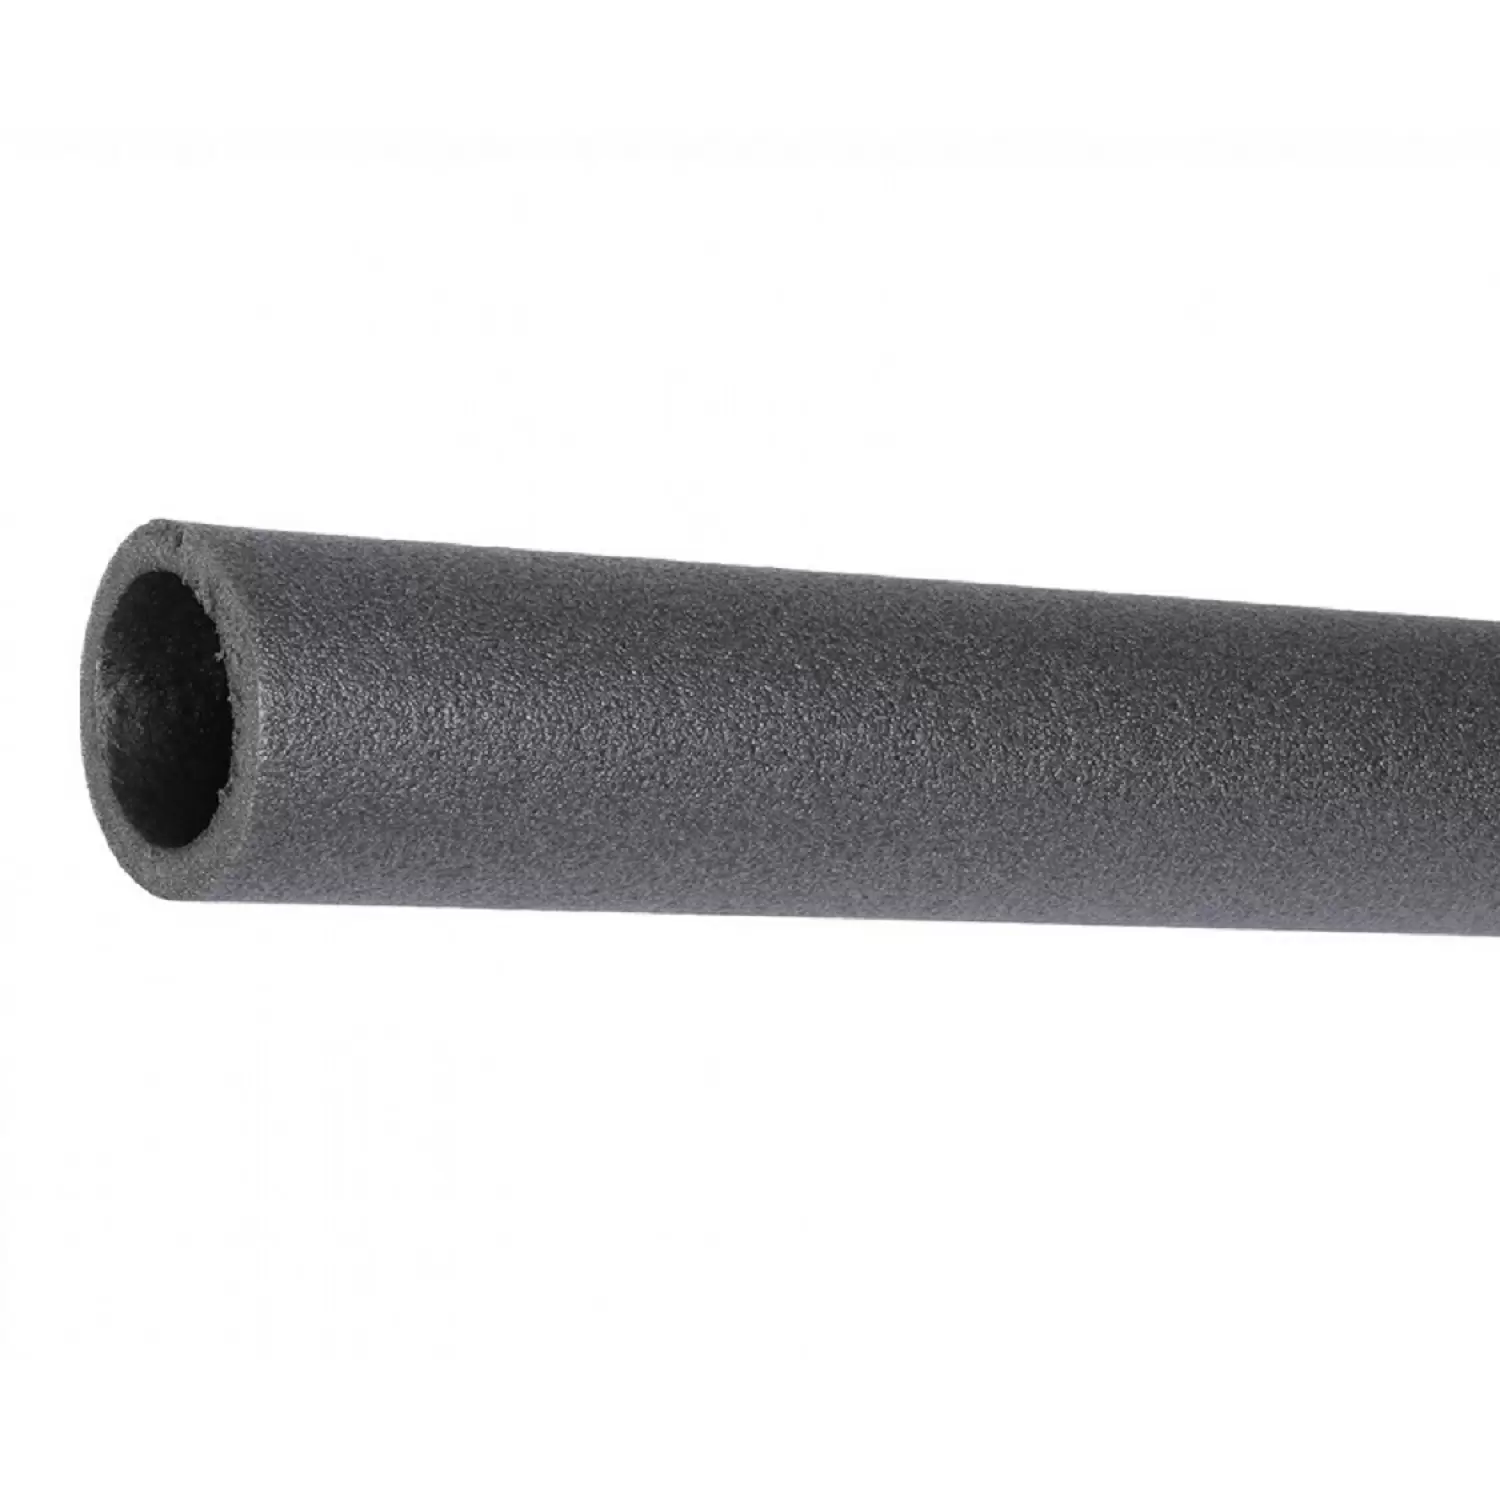 Теплоизоляция Энергофлекс супер 18/6 для труб диаметром 16 мм, трубка 2 м